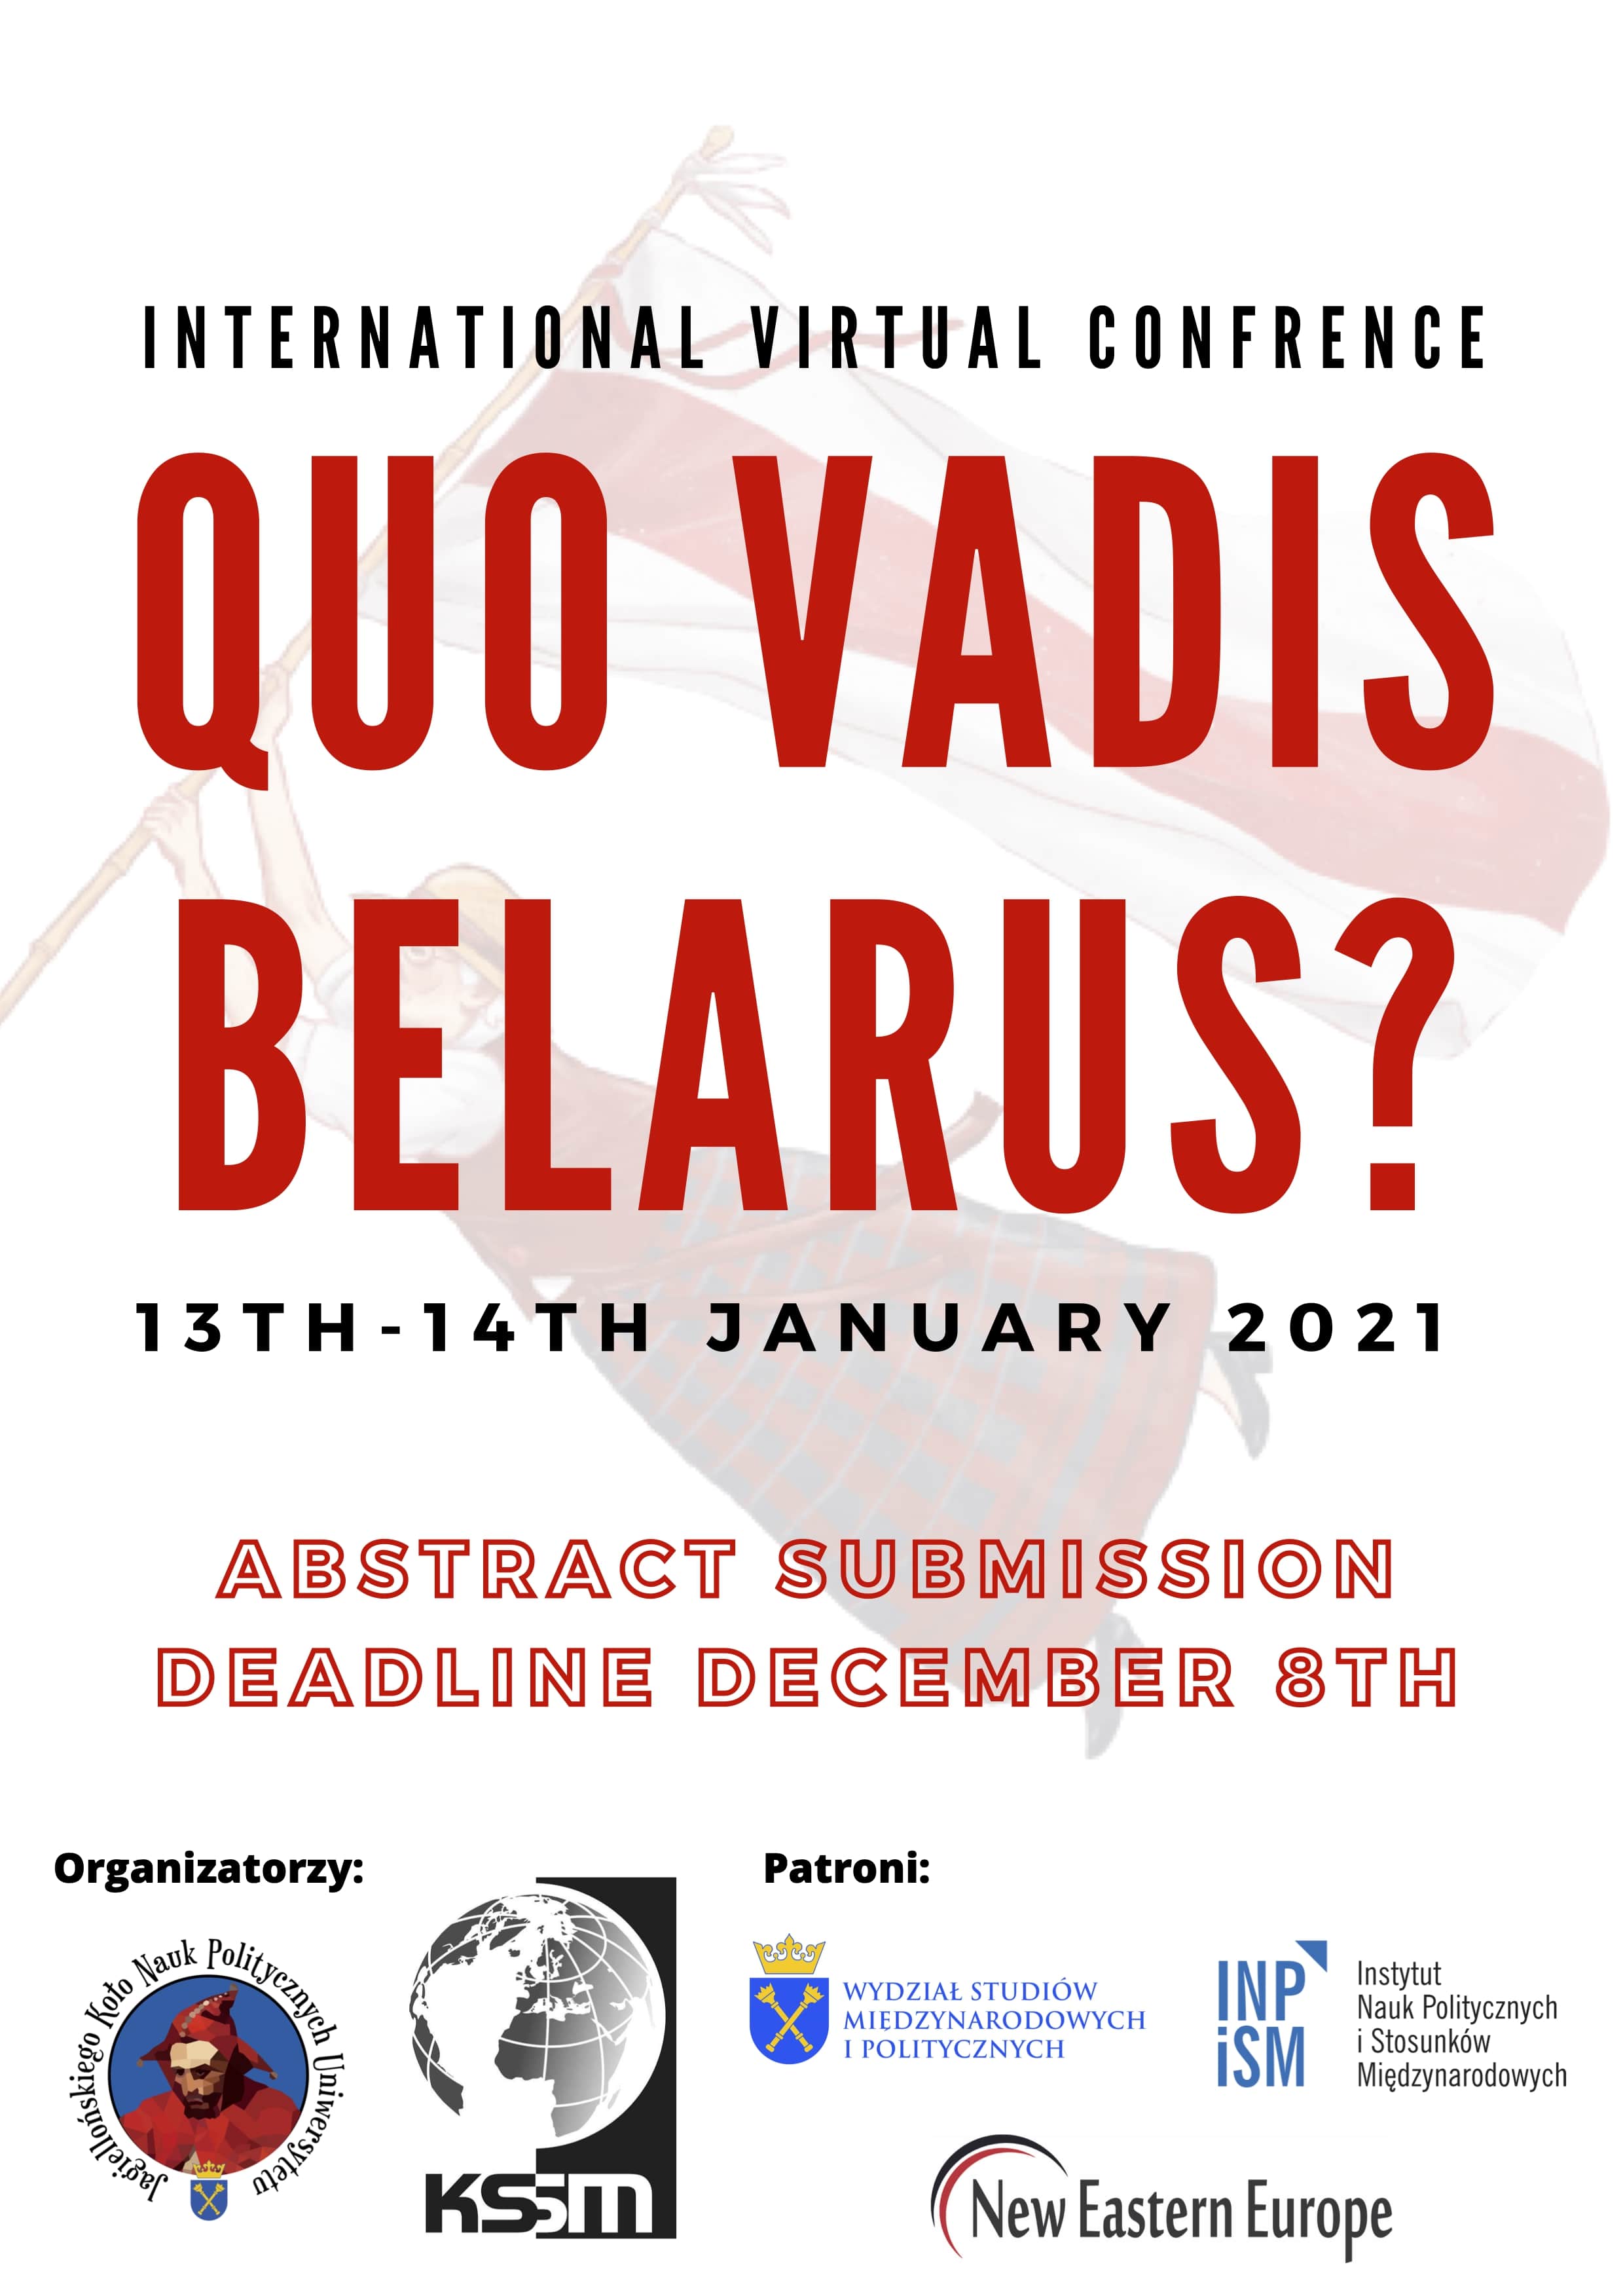 Plakat promujący konferencję Quo Vadis Belarus